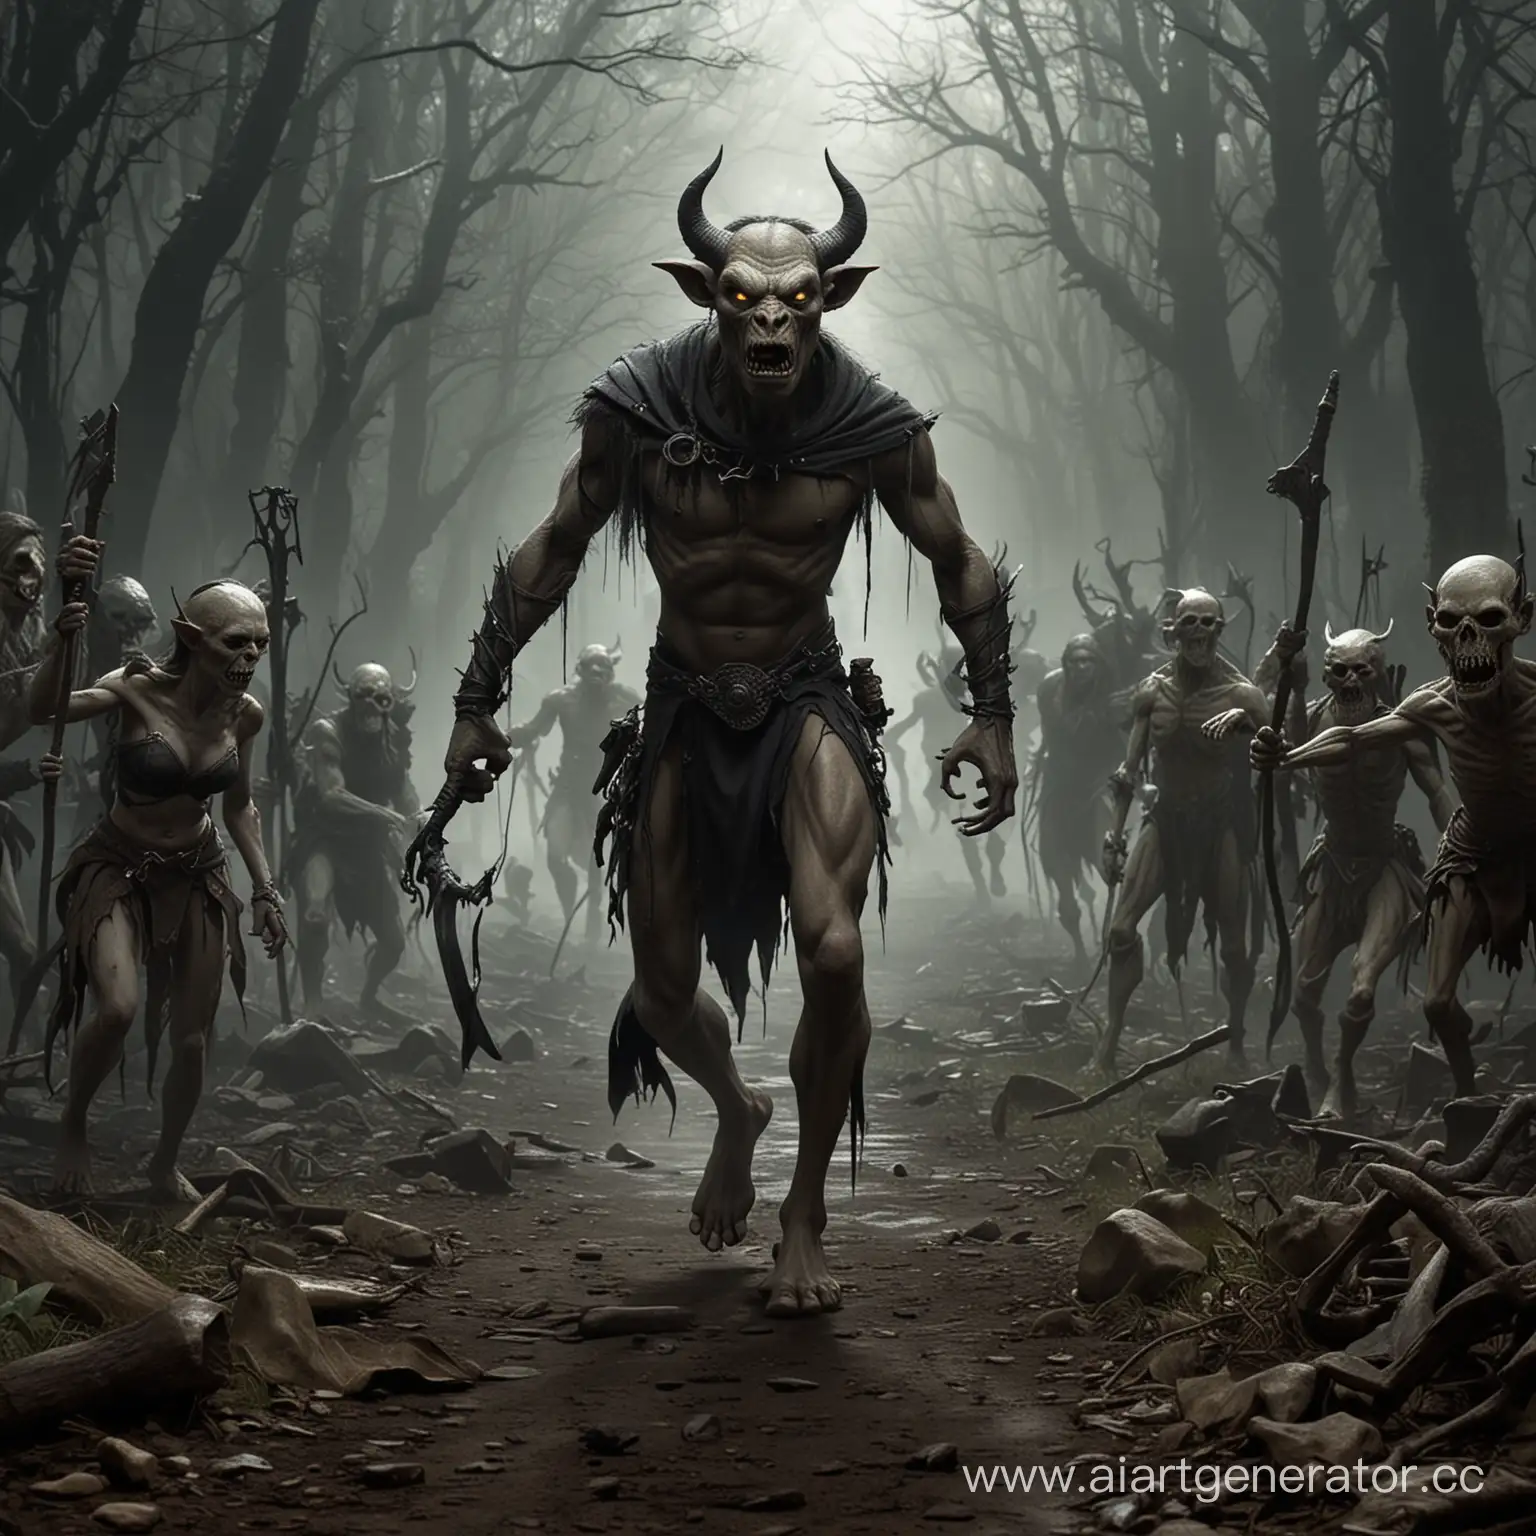 Terrifying-Goblin-Rampage-in-Dark-Dungeon-Women-Fleeing-in-Fear